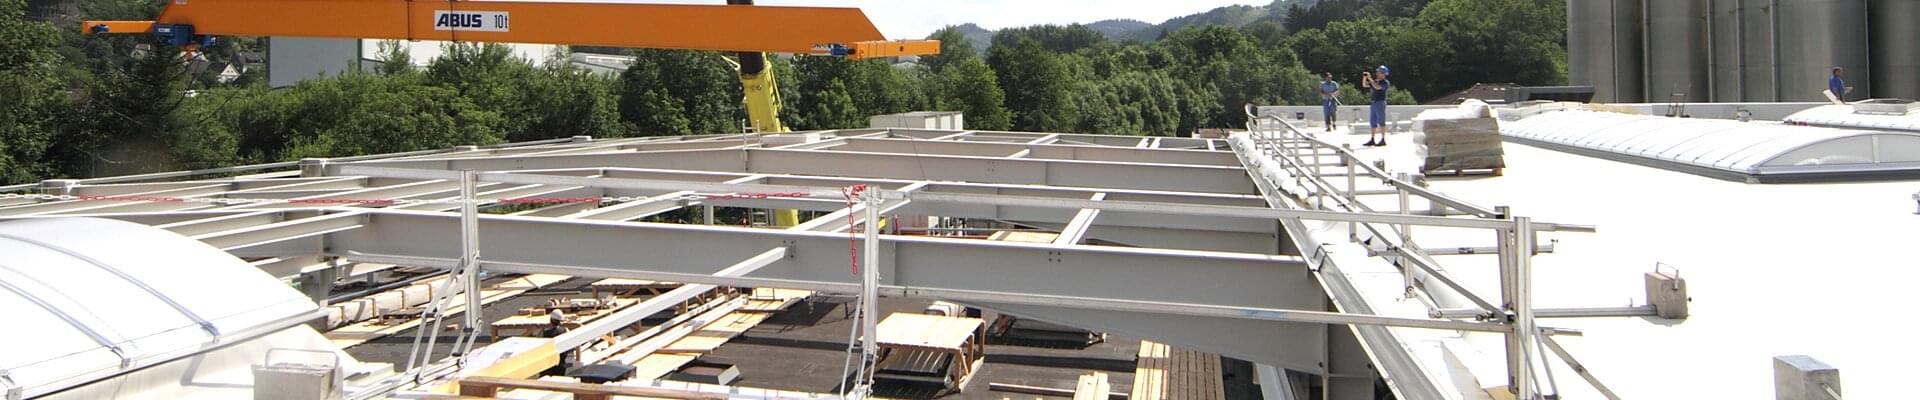 ABUS crane to help increase the production area of the Jokey Plastik company.